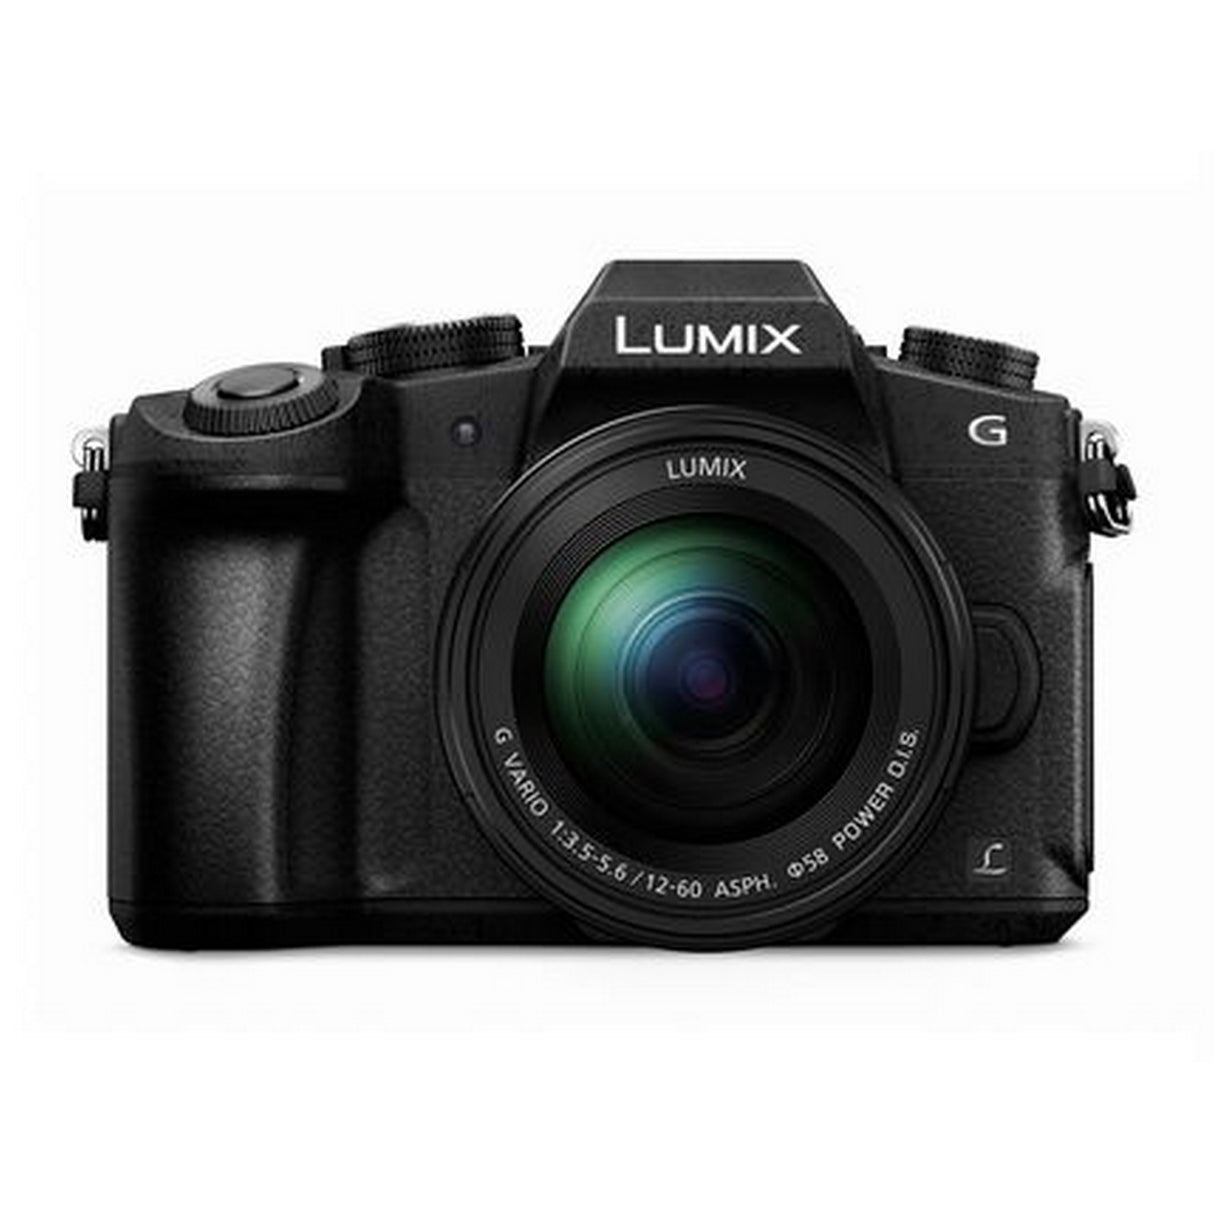 Panasonic LUMIX DMC-G85MK Mirrorless Camera with 12-60mm F3.5-5.6 Lens